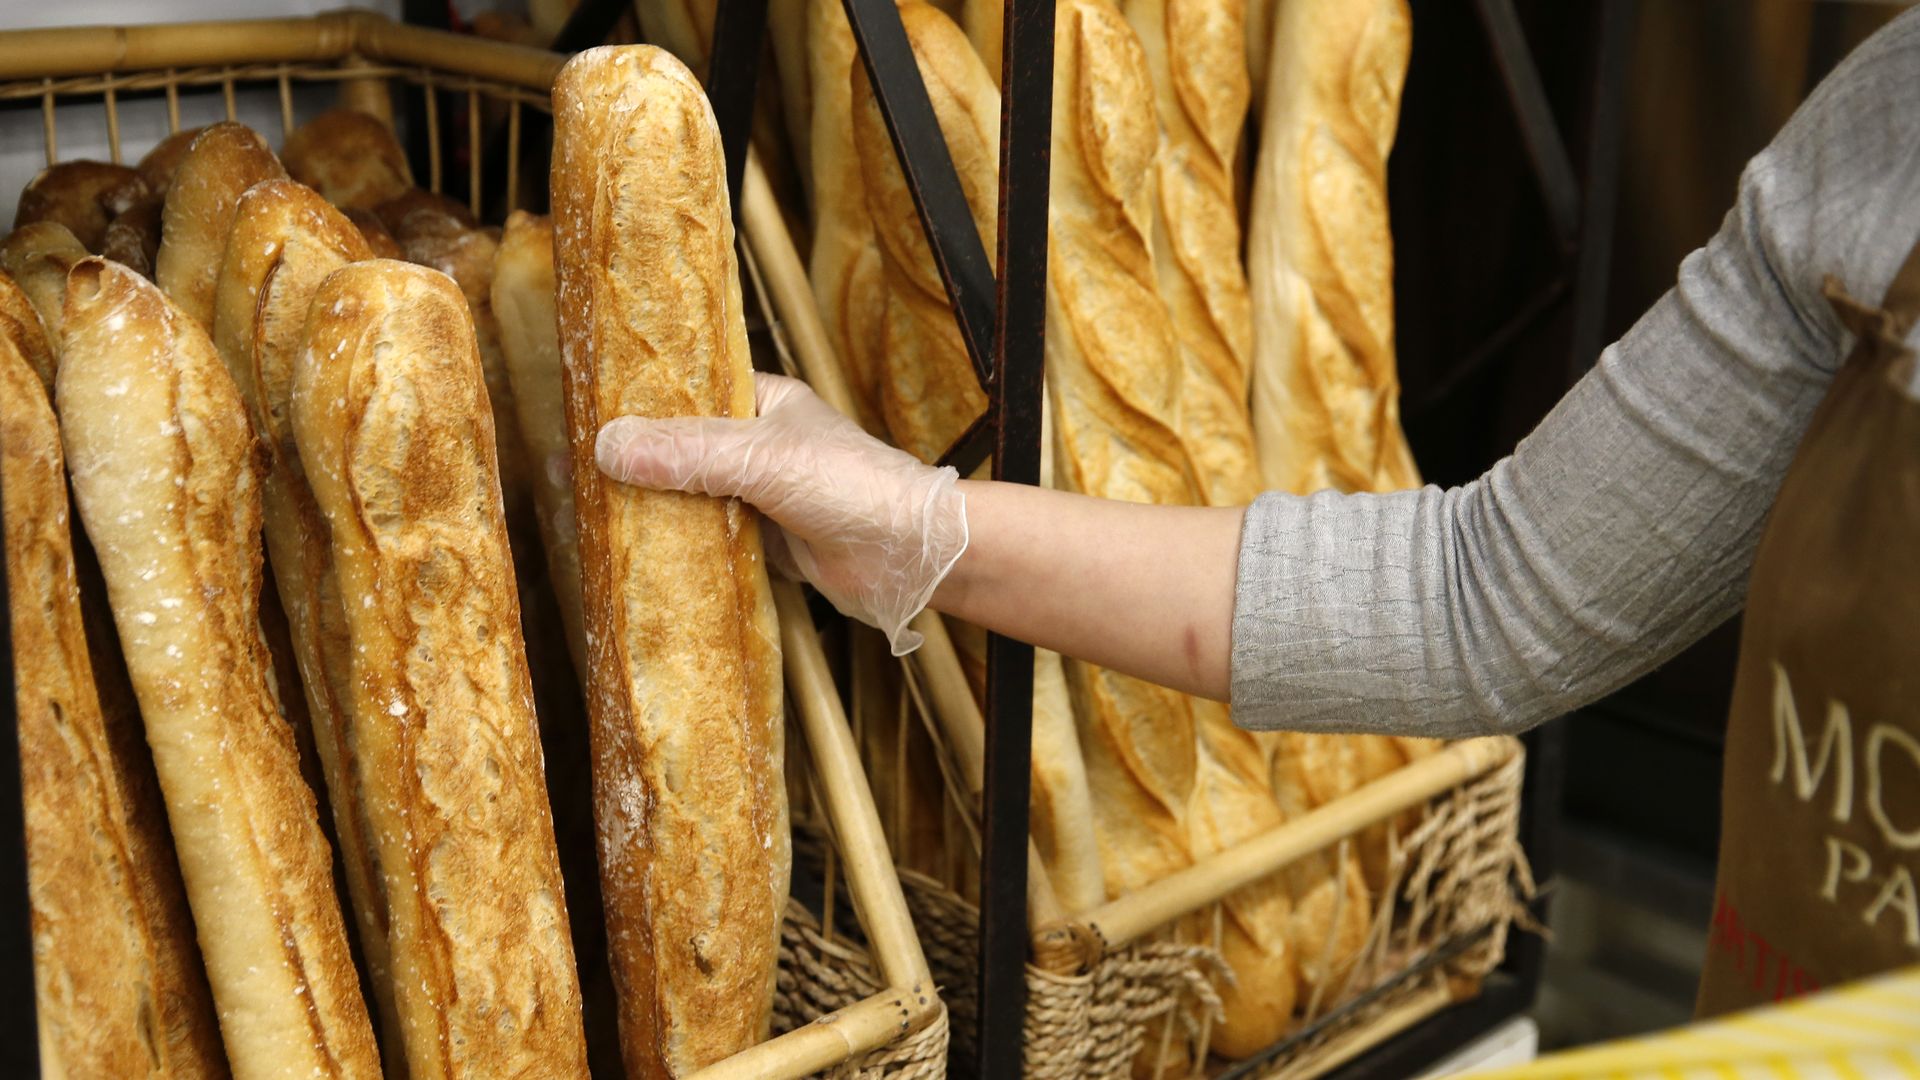 A baker holds a freshly baked baguette inside a bakery on October 26, 2021 in Paris, France.